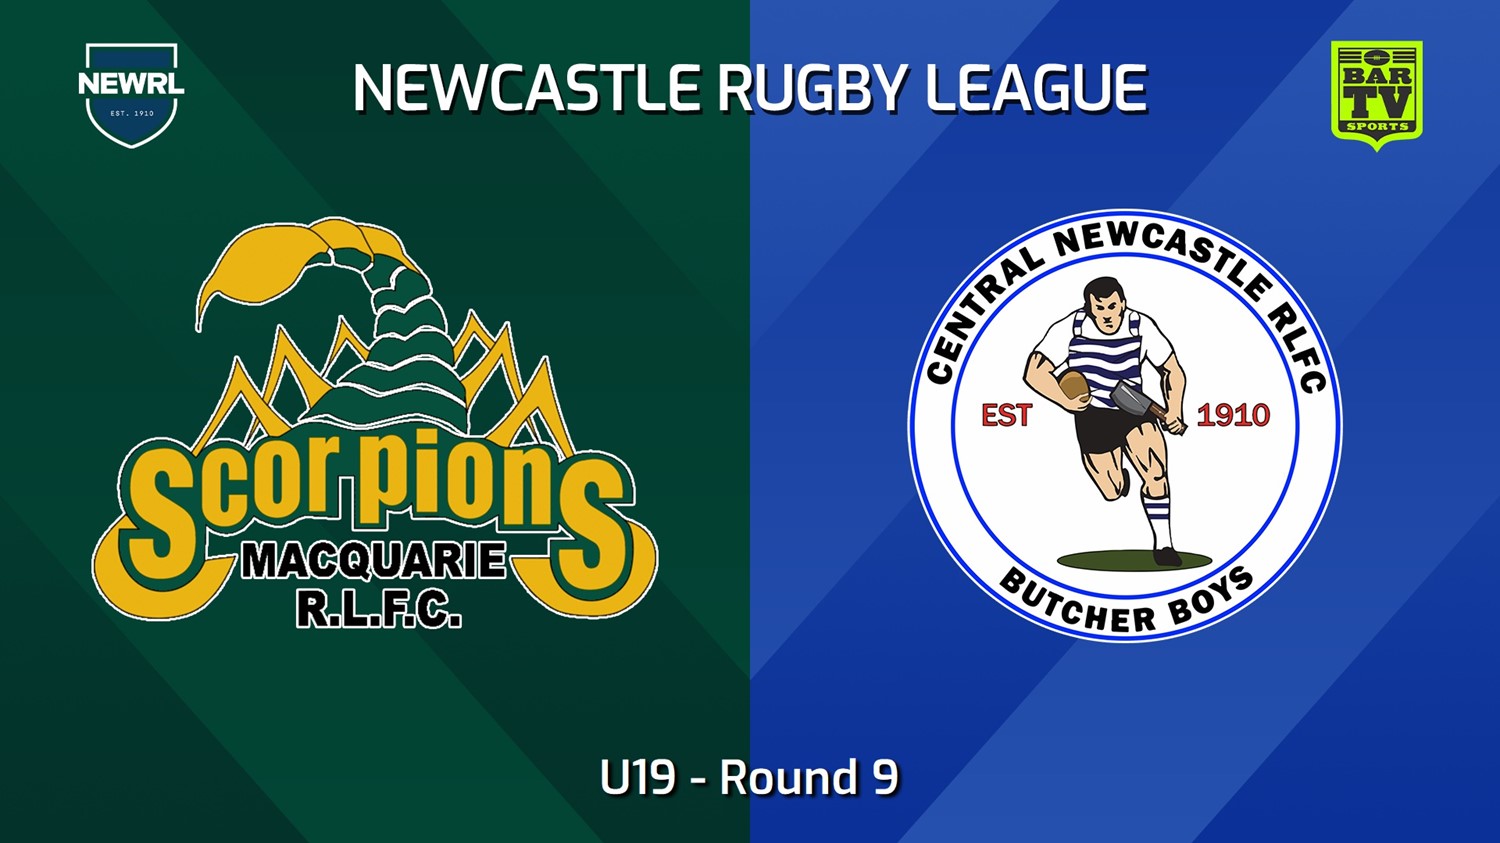 240618-video-Newcastle RL Round 9 - U19 - Macquarie Scorpions v Central Newcastle Butcher Boys Slate Image